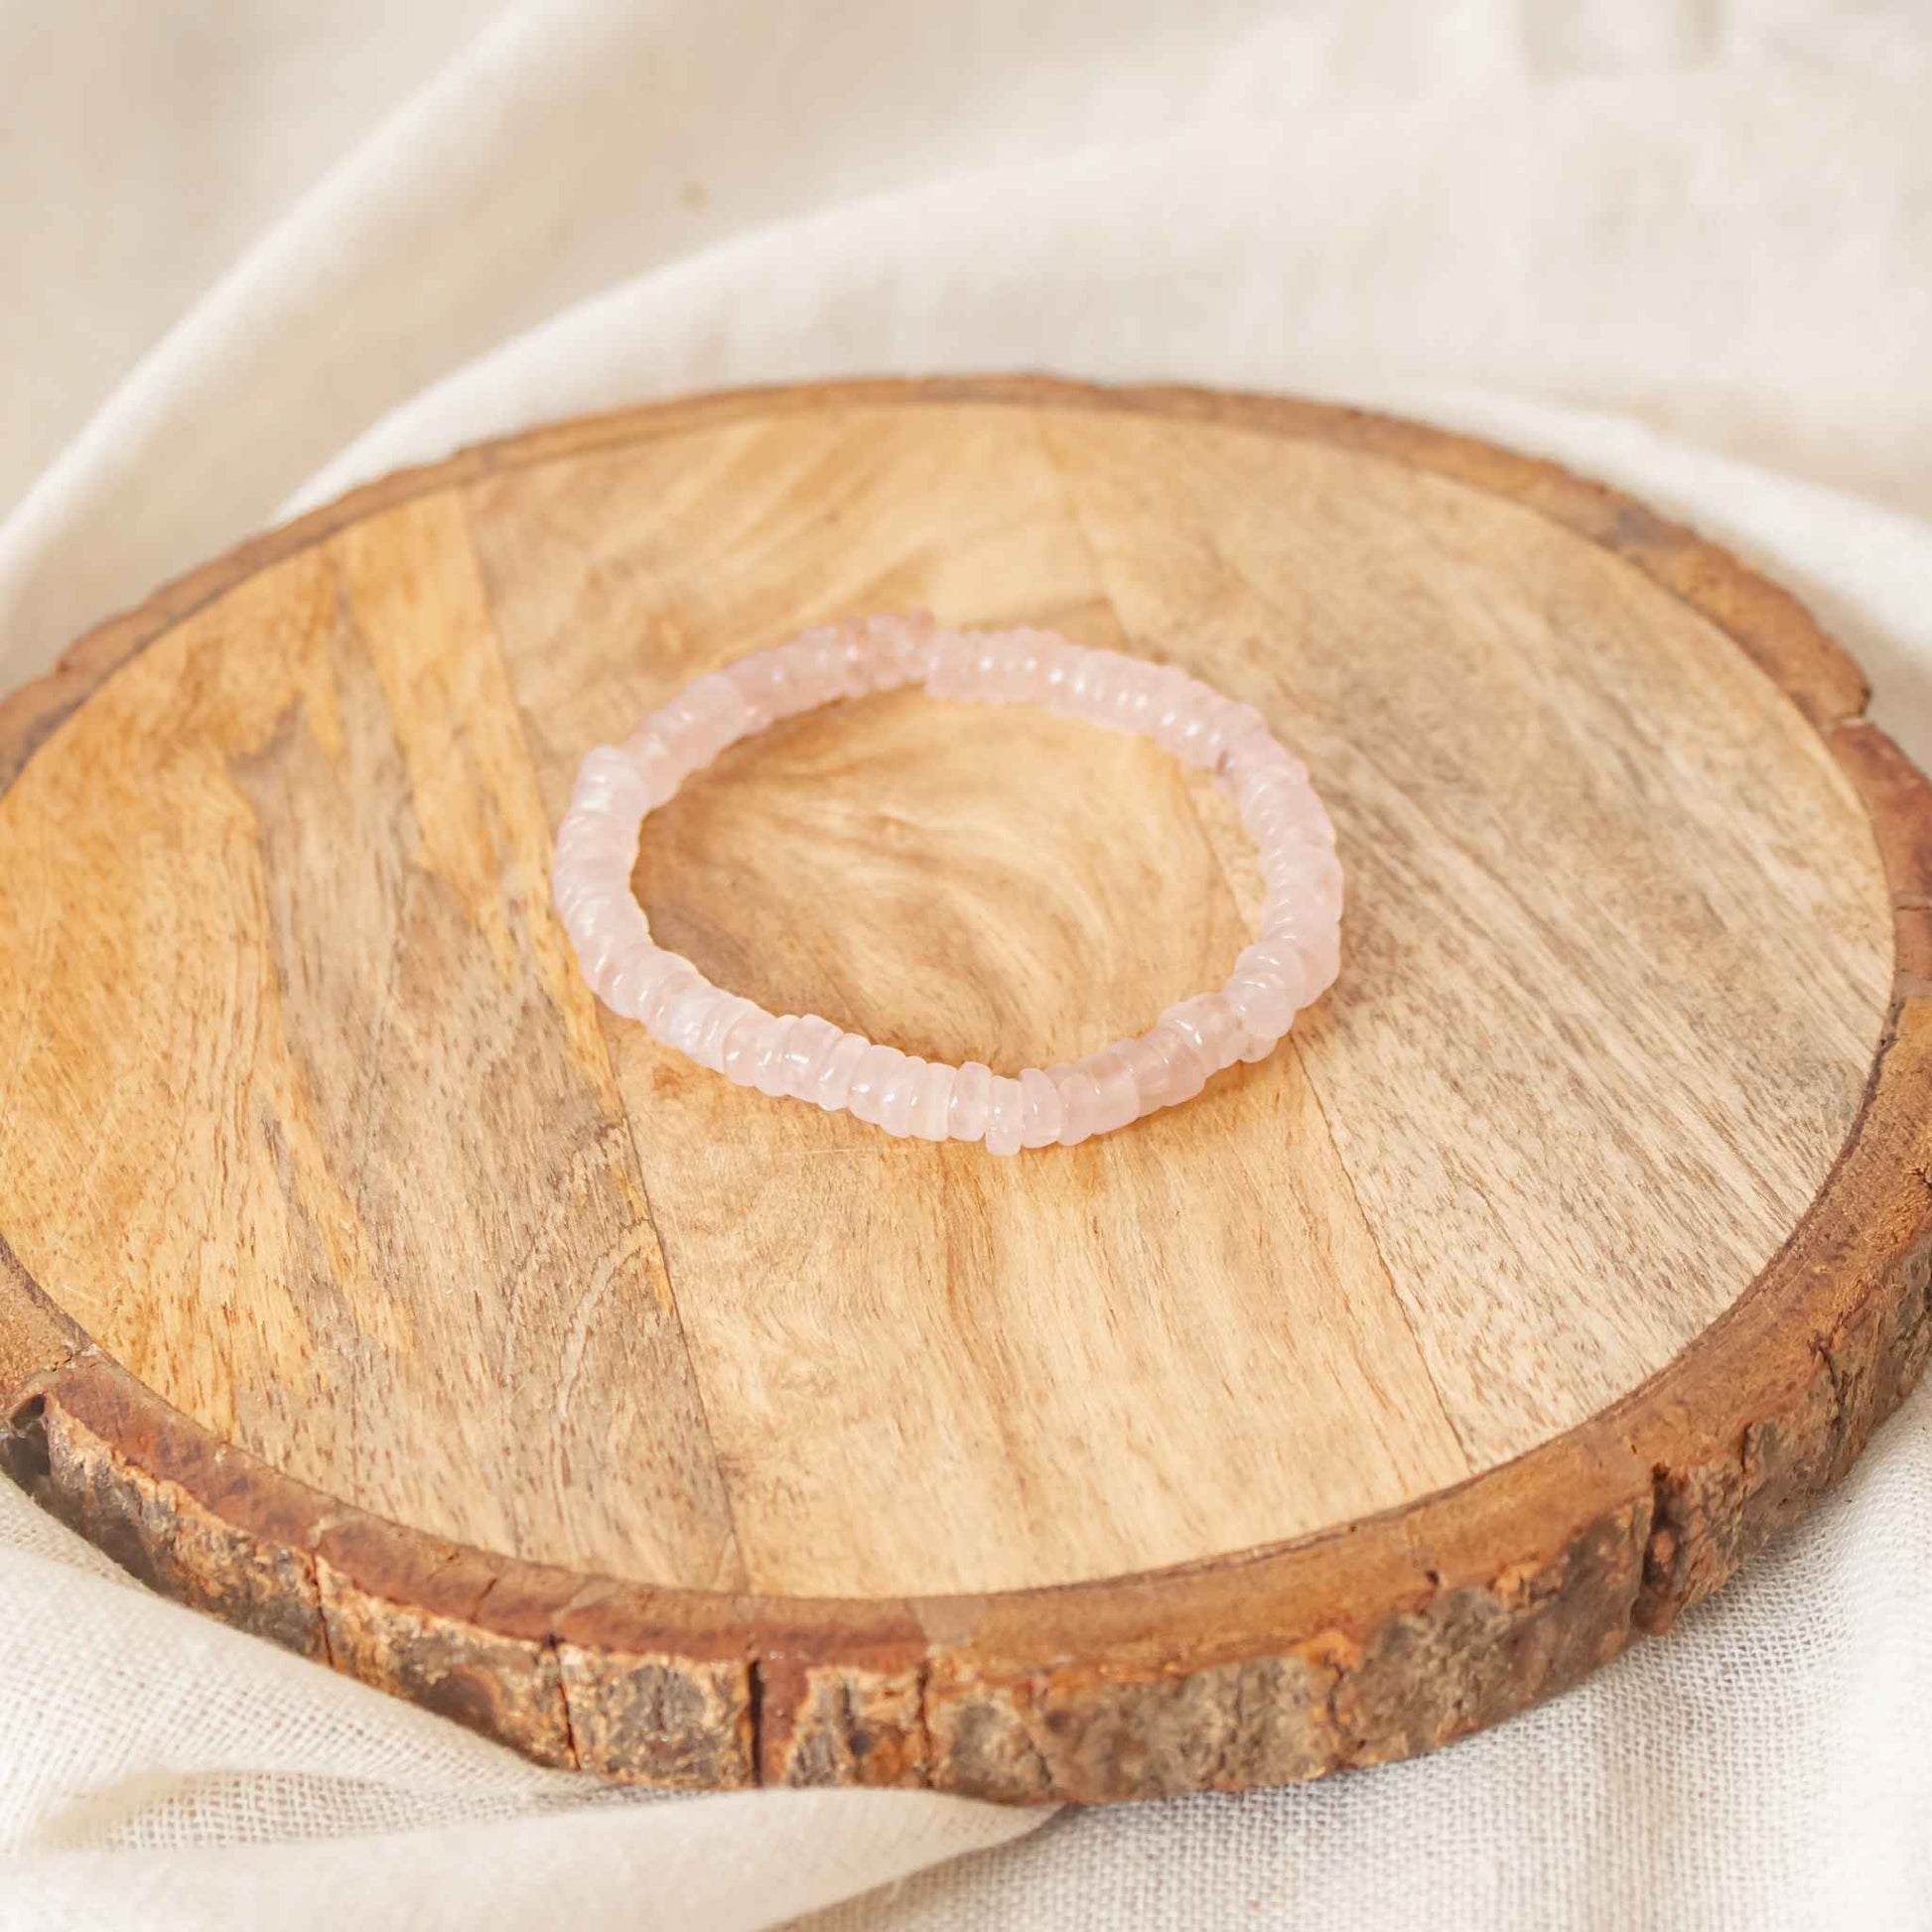 rose quartz natural tyre bead bracelet handmade in India